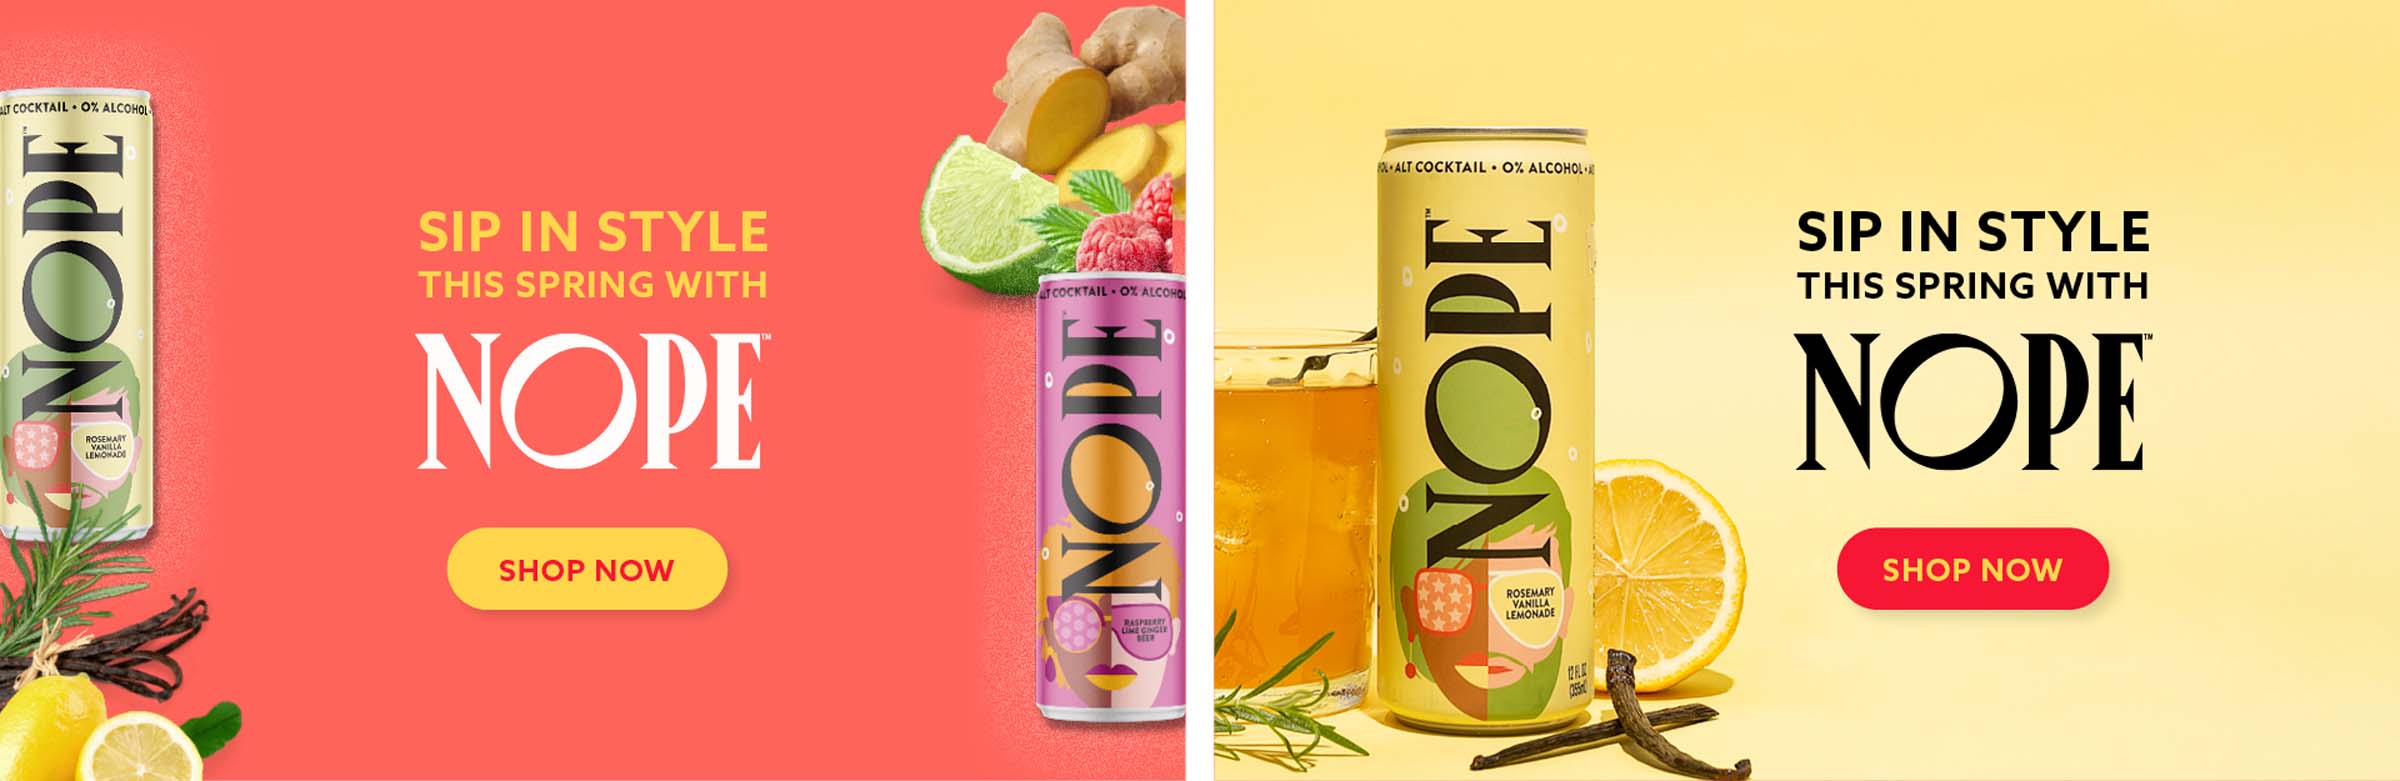 NOPE Beverages - Portfolio Image - Email Graphic Mockups Example